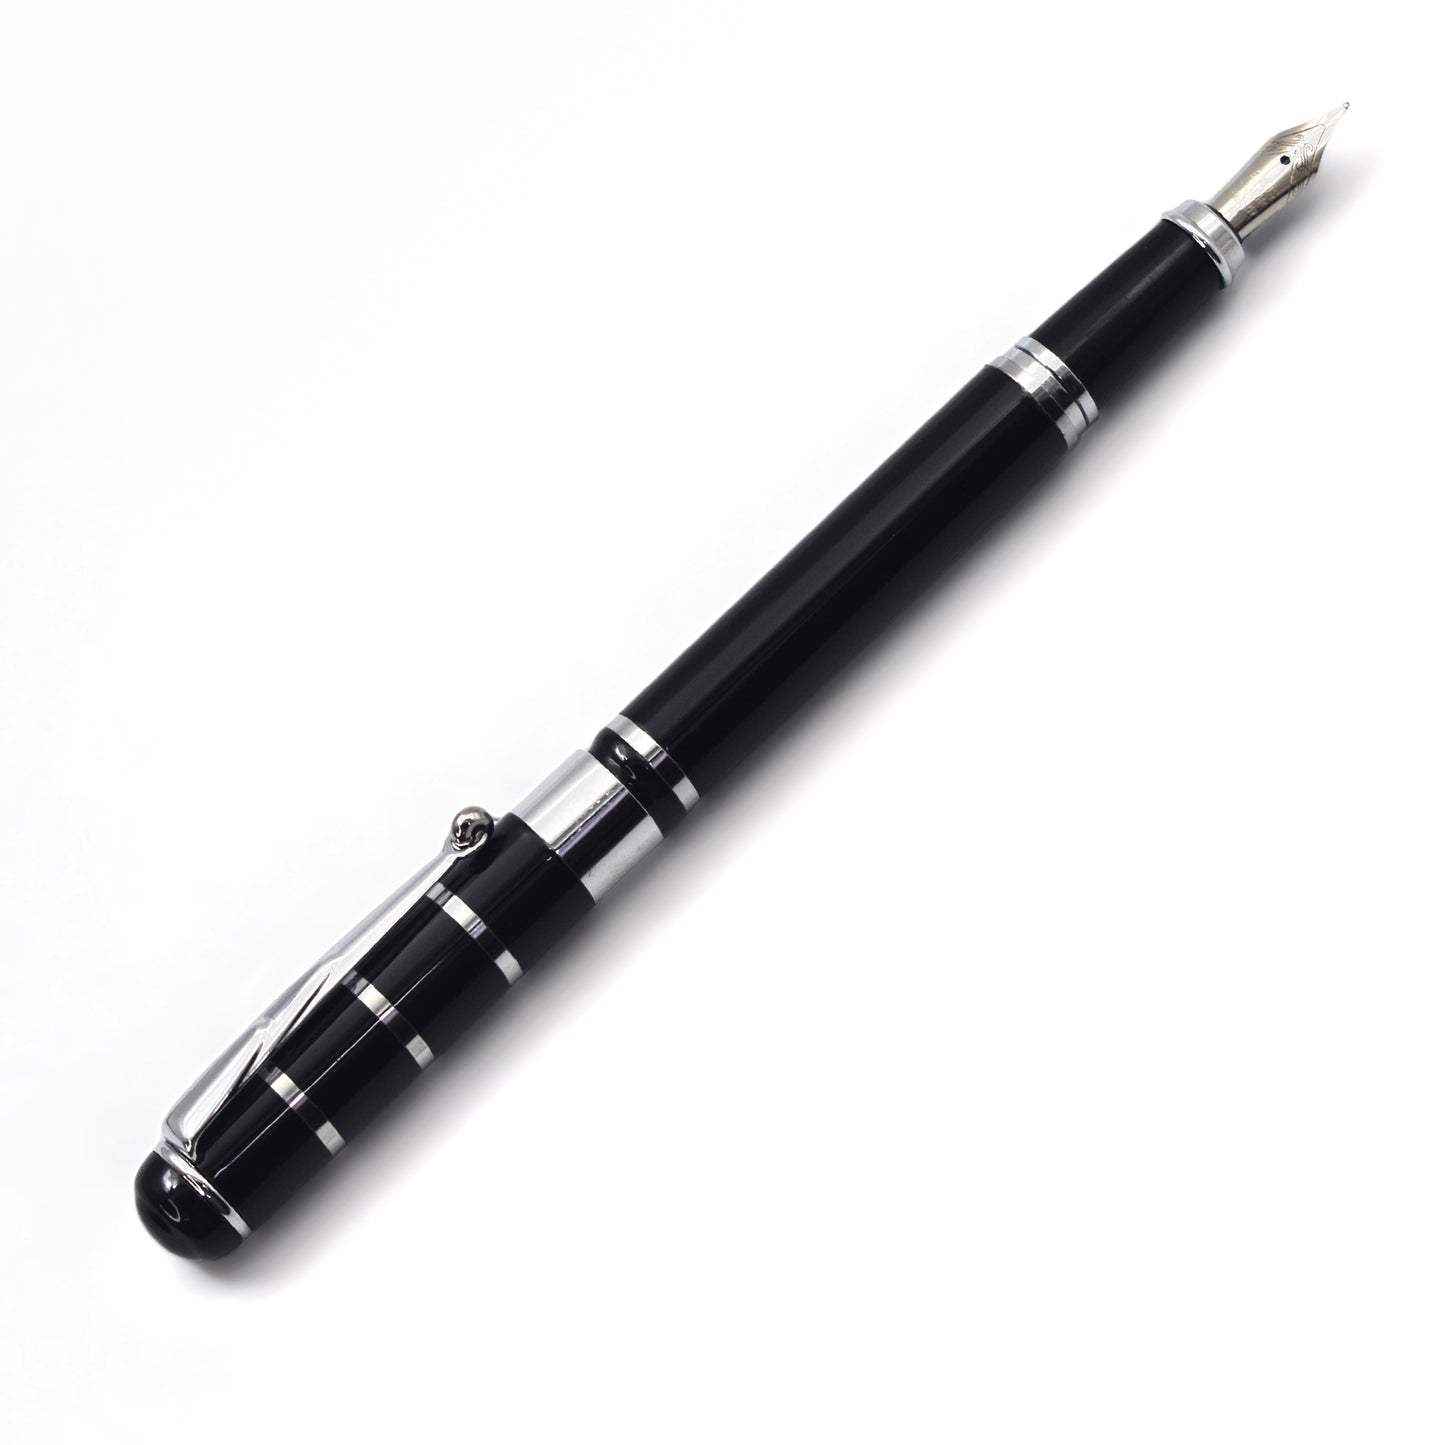 Premium Quality Luxury Imported Ink Pen | Ink Pen 999 + Hero ink 50ml